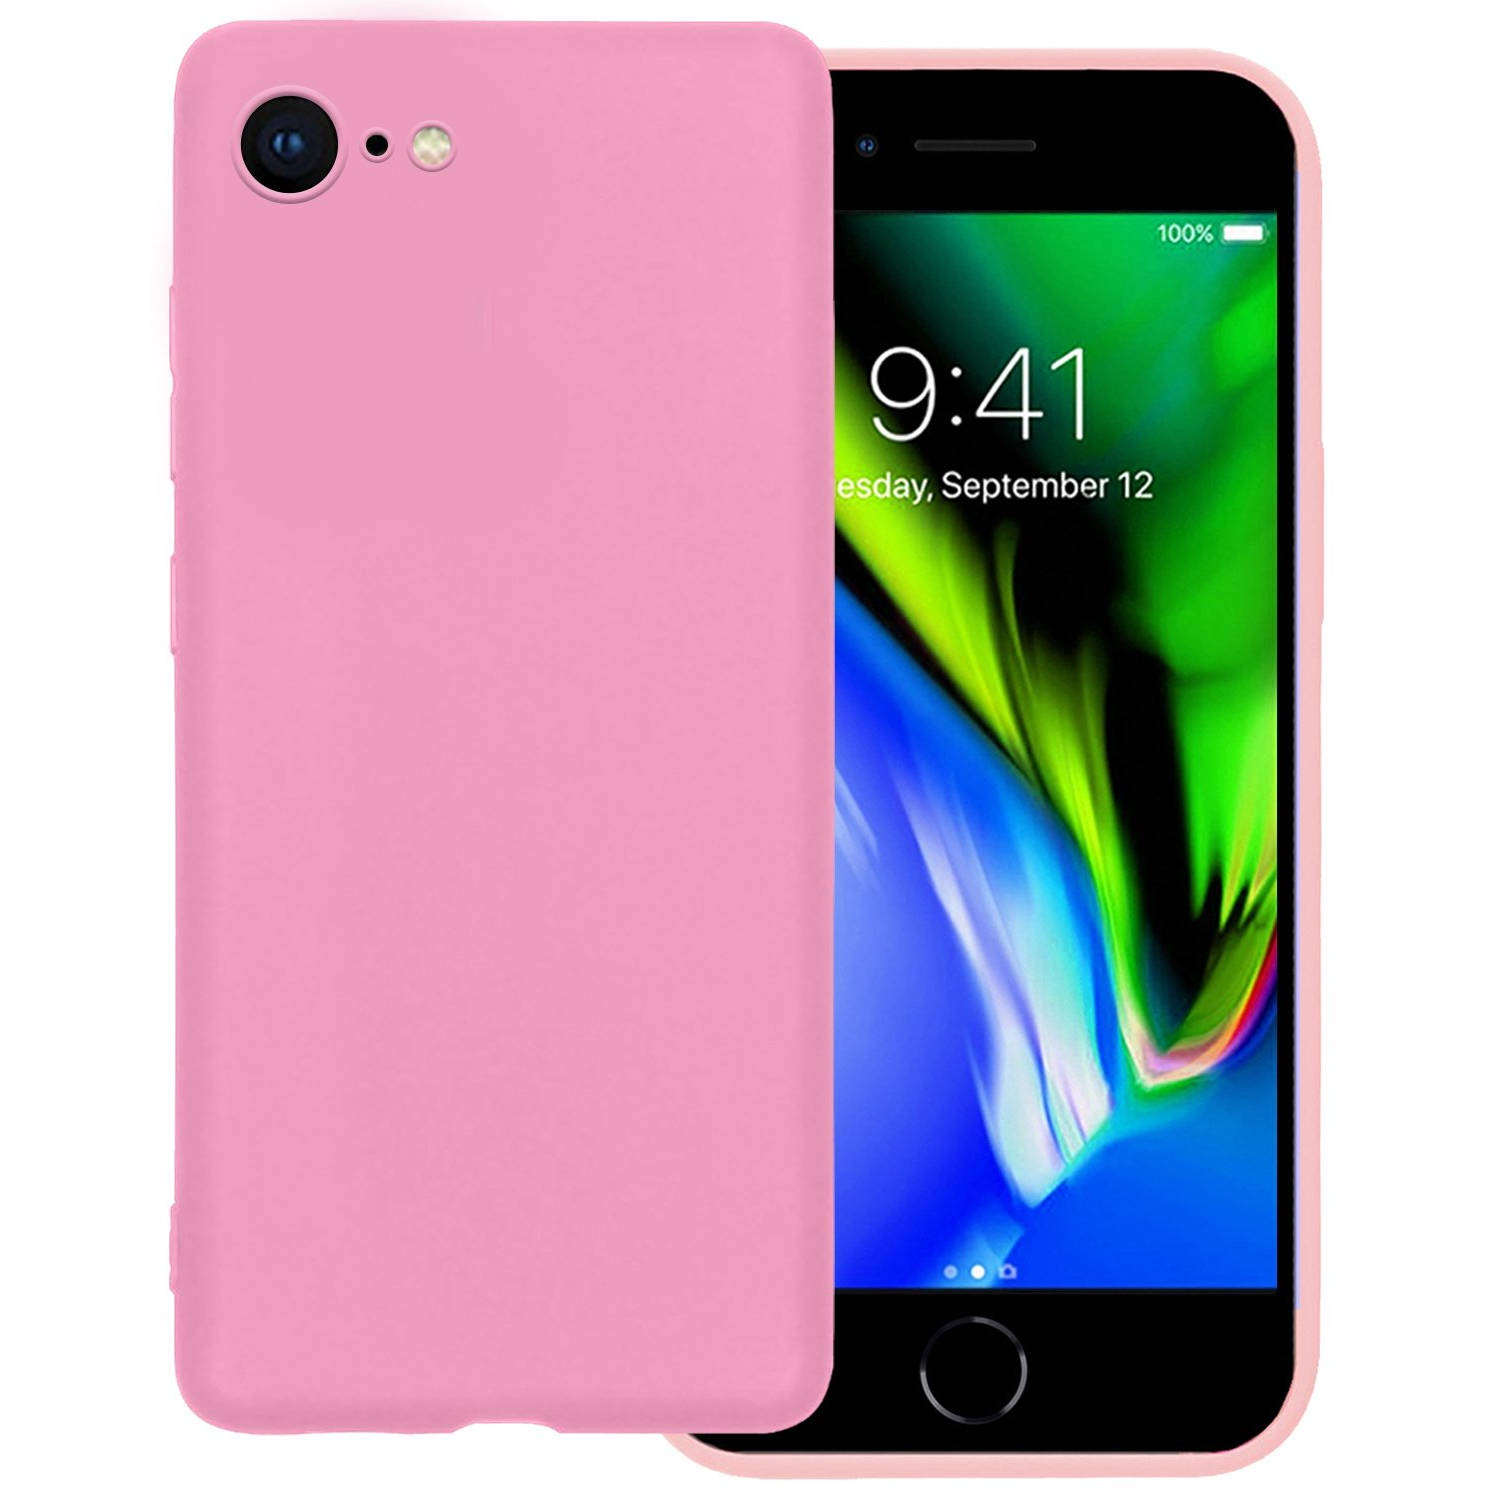 Basey Apple iPhone SE (2020) Hoesje Siliconen Hoes Case Cover - Lichtroze